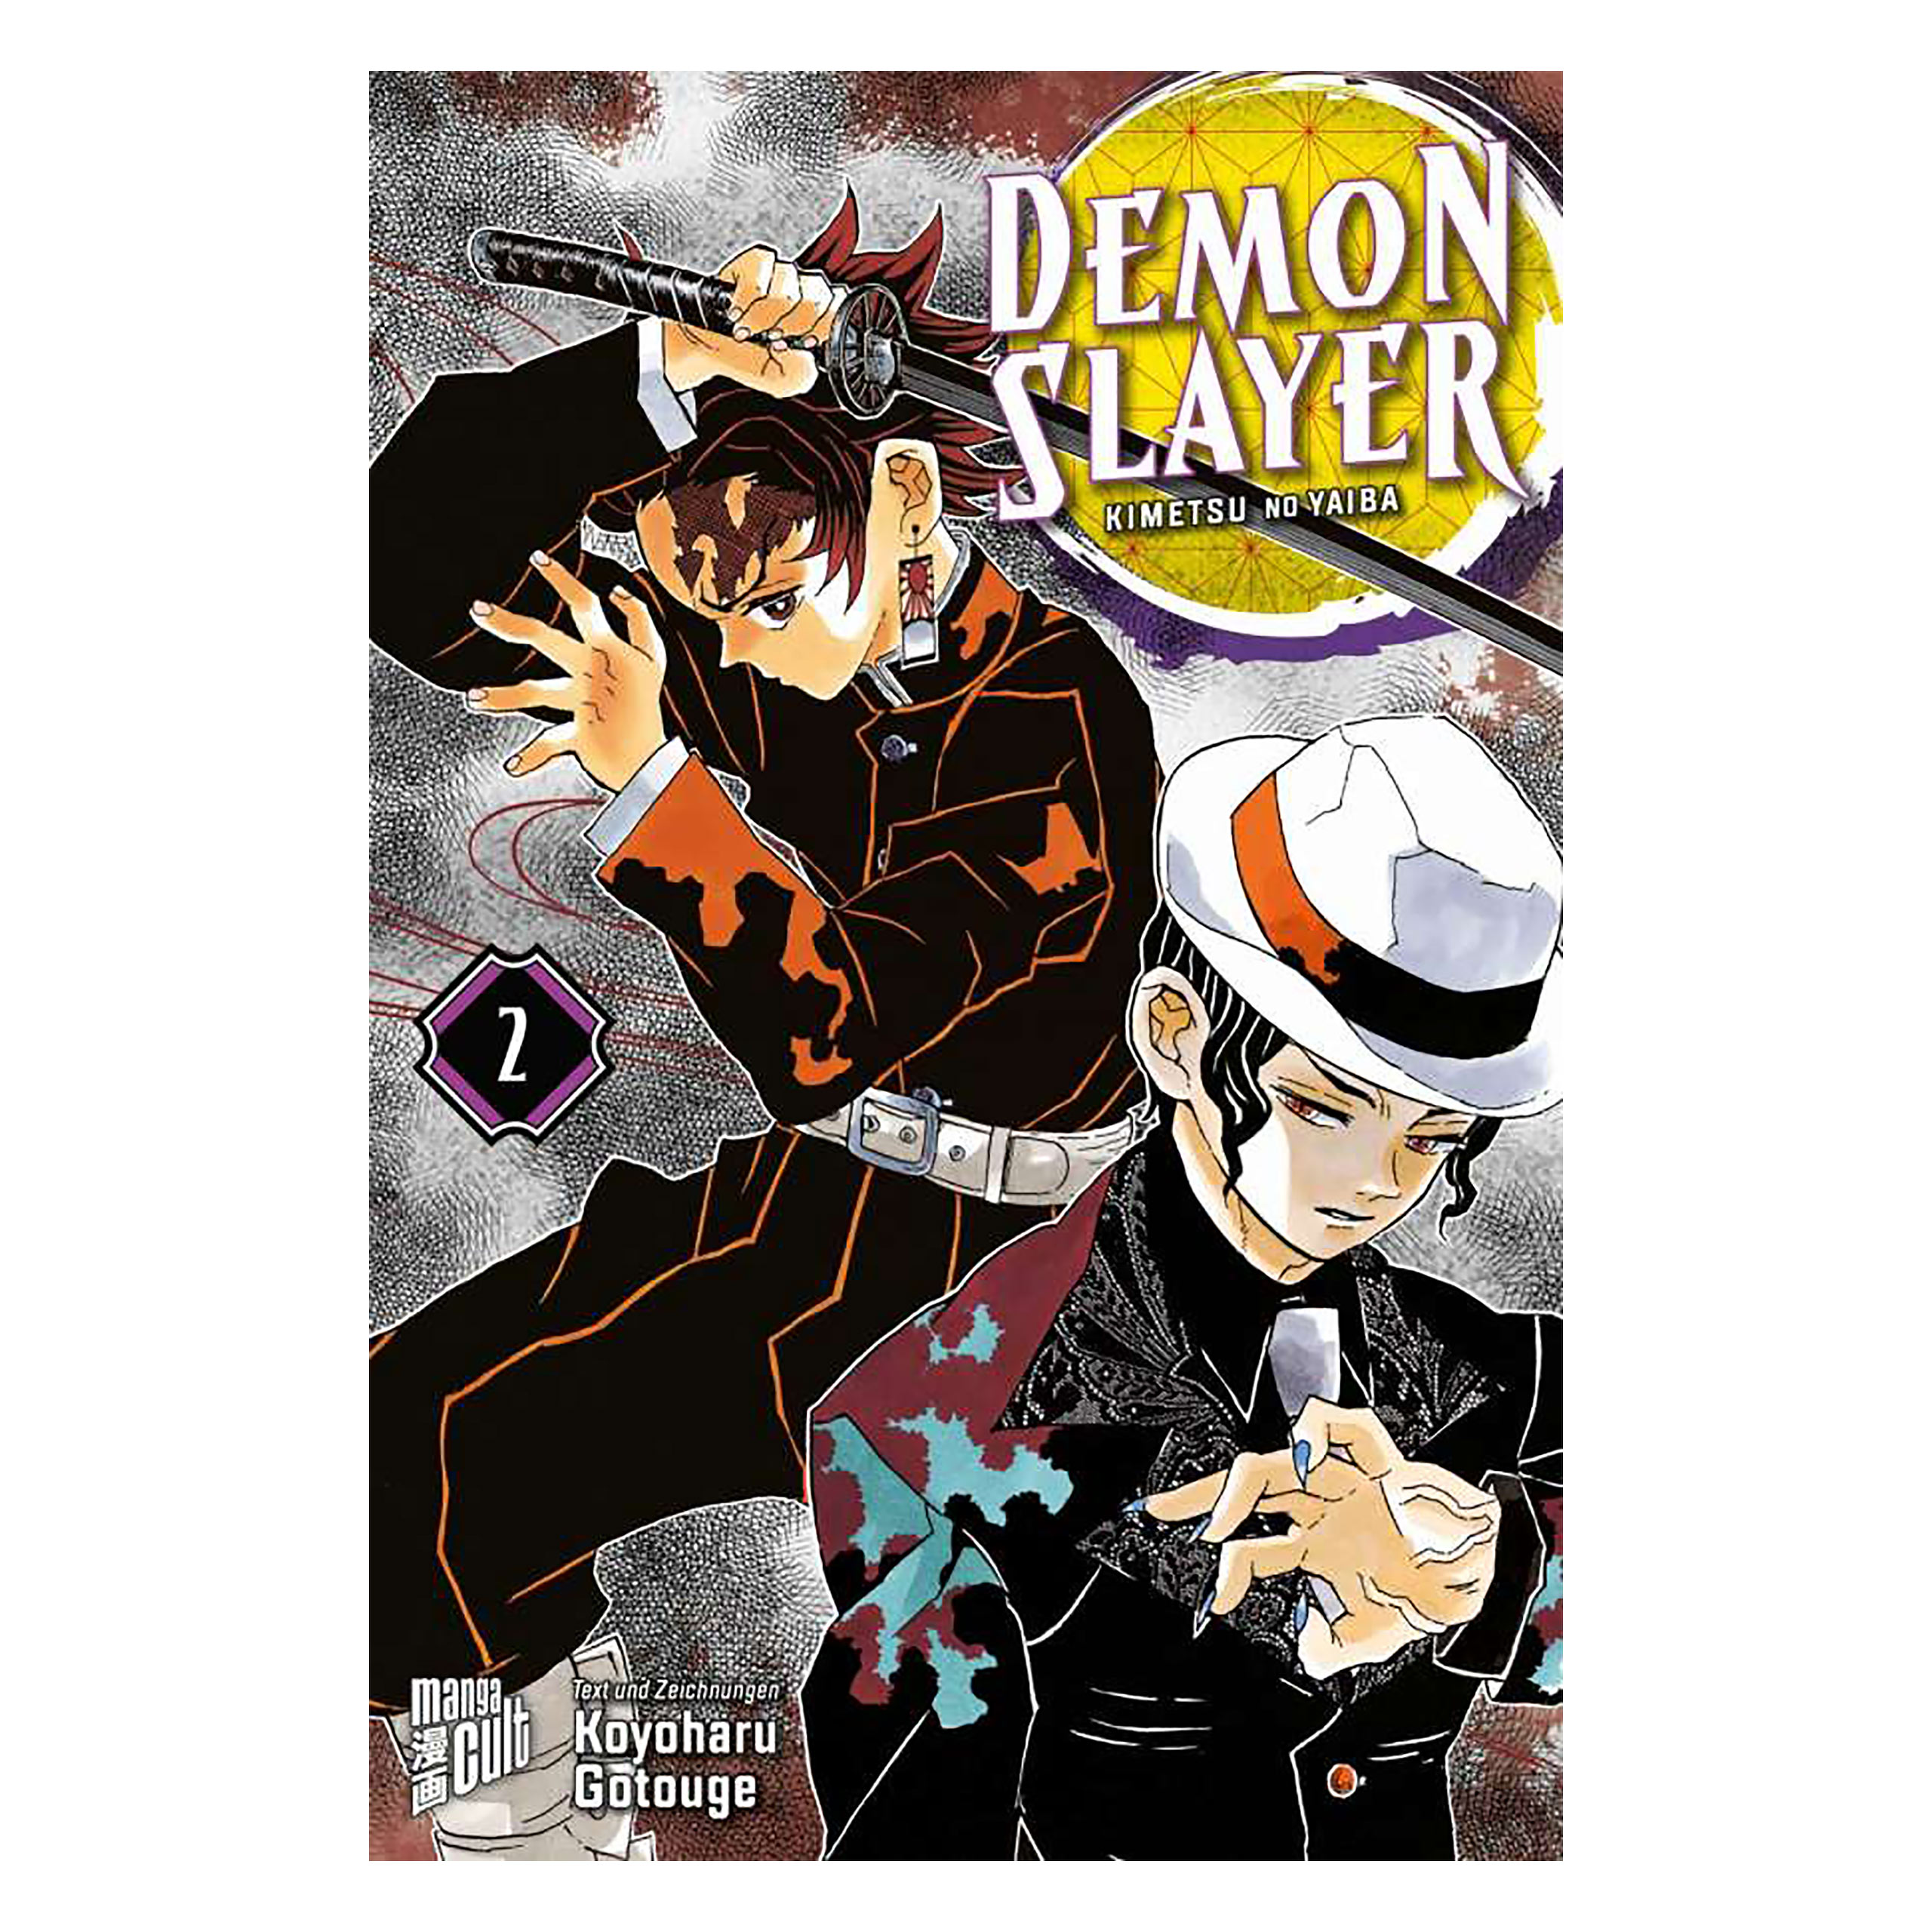 Demon Slayer - Kimetsu no yaiba Band 2 Taschenbuch